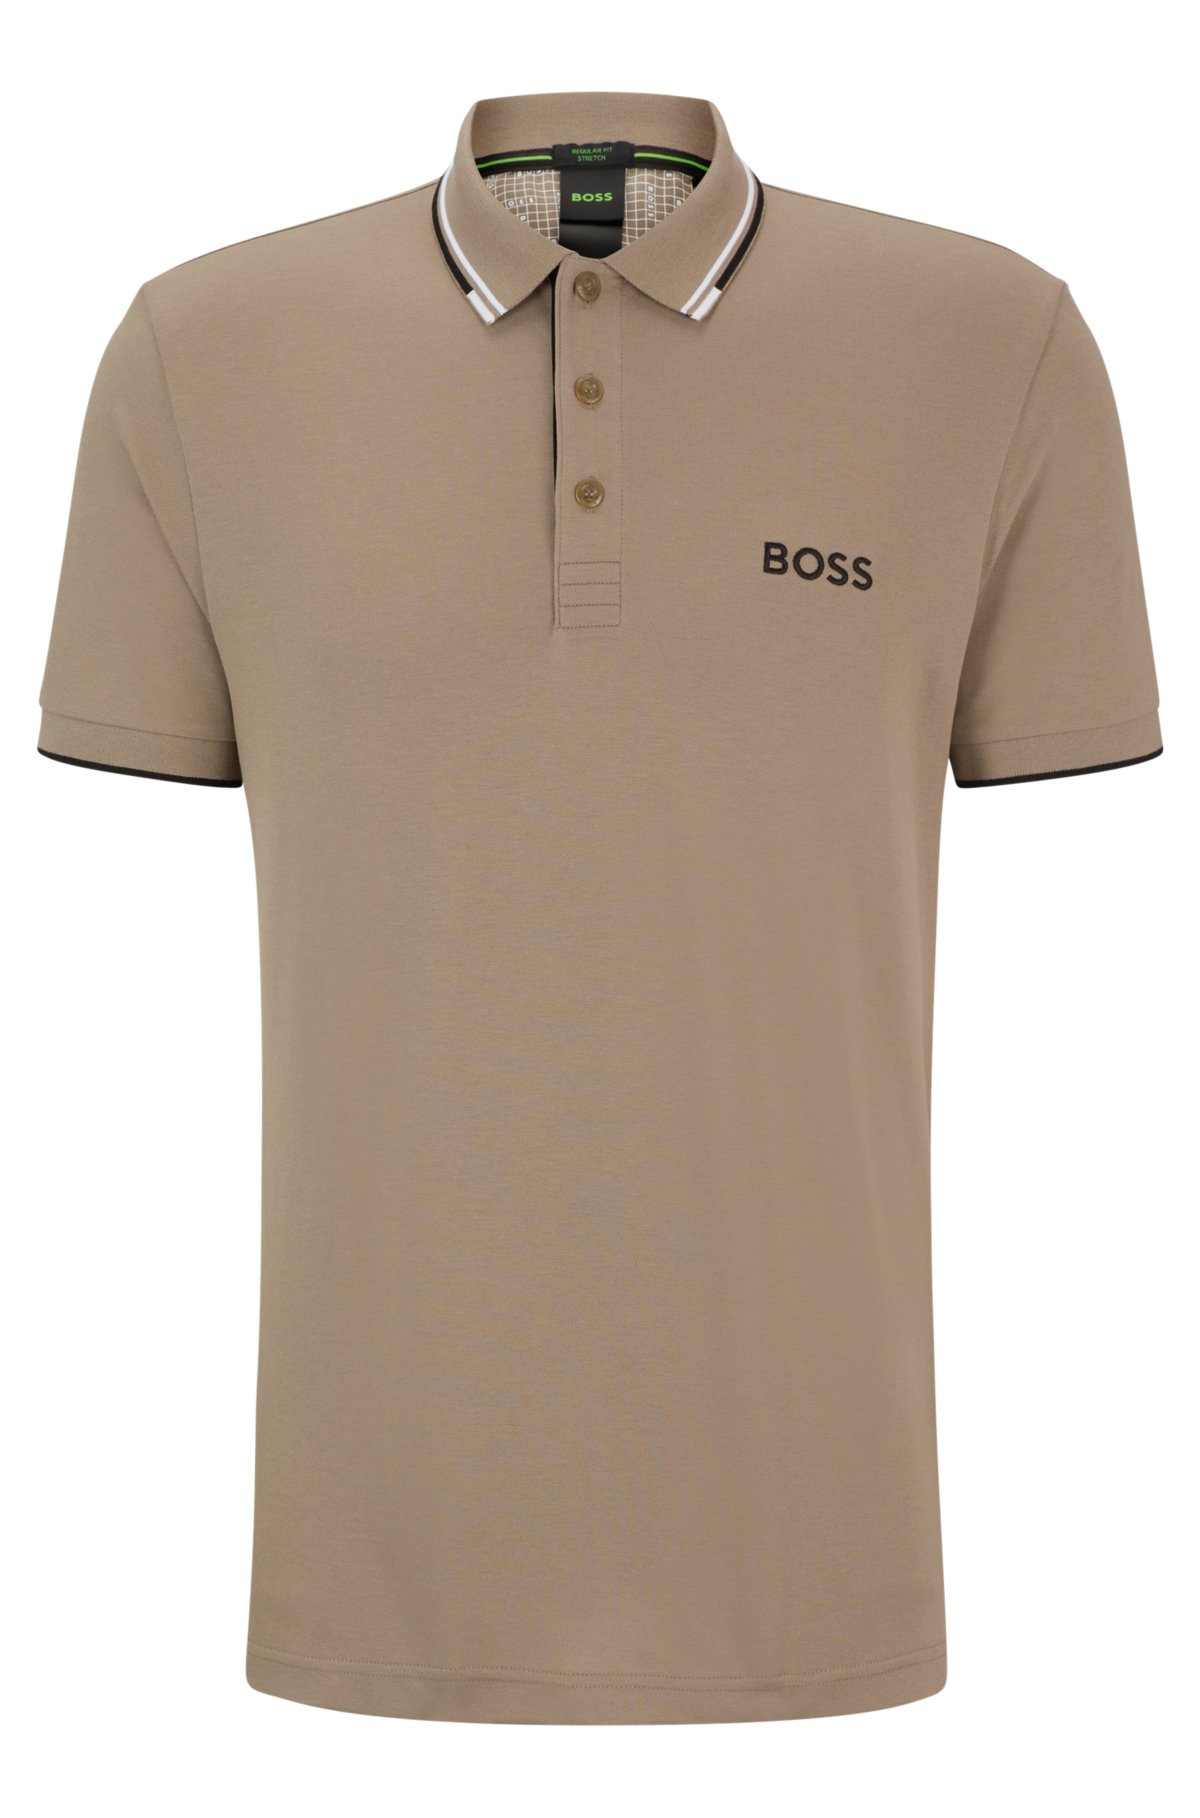 BOSS - コットンブレンド ポロシャツ コントラストロゴ